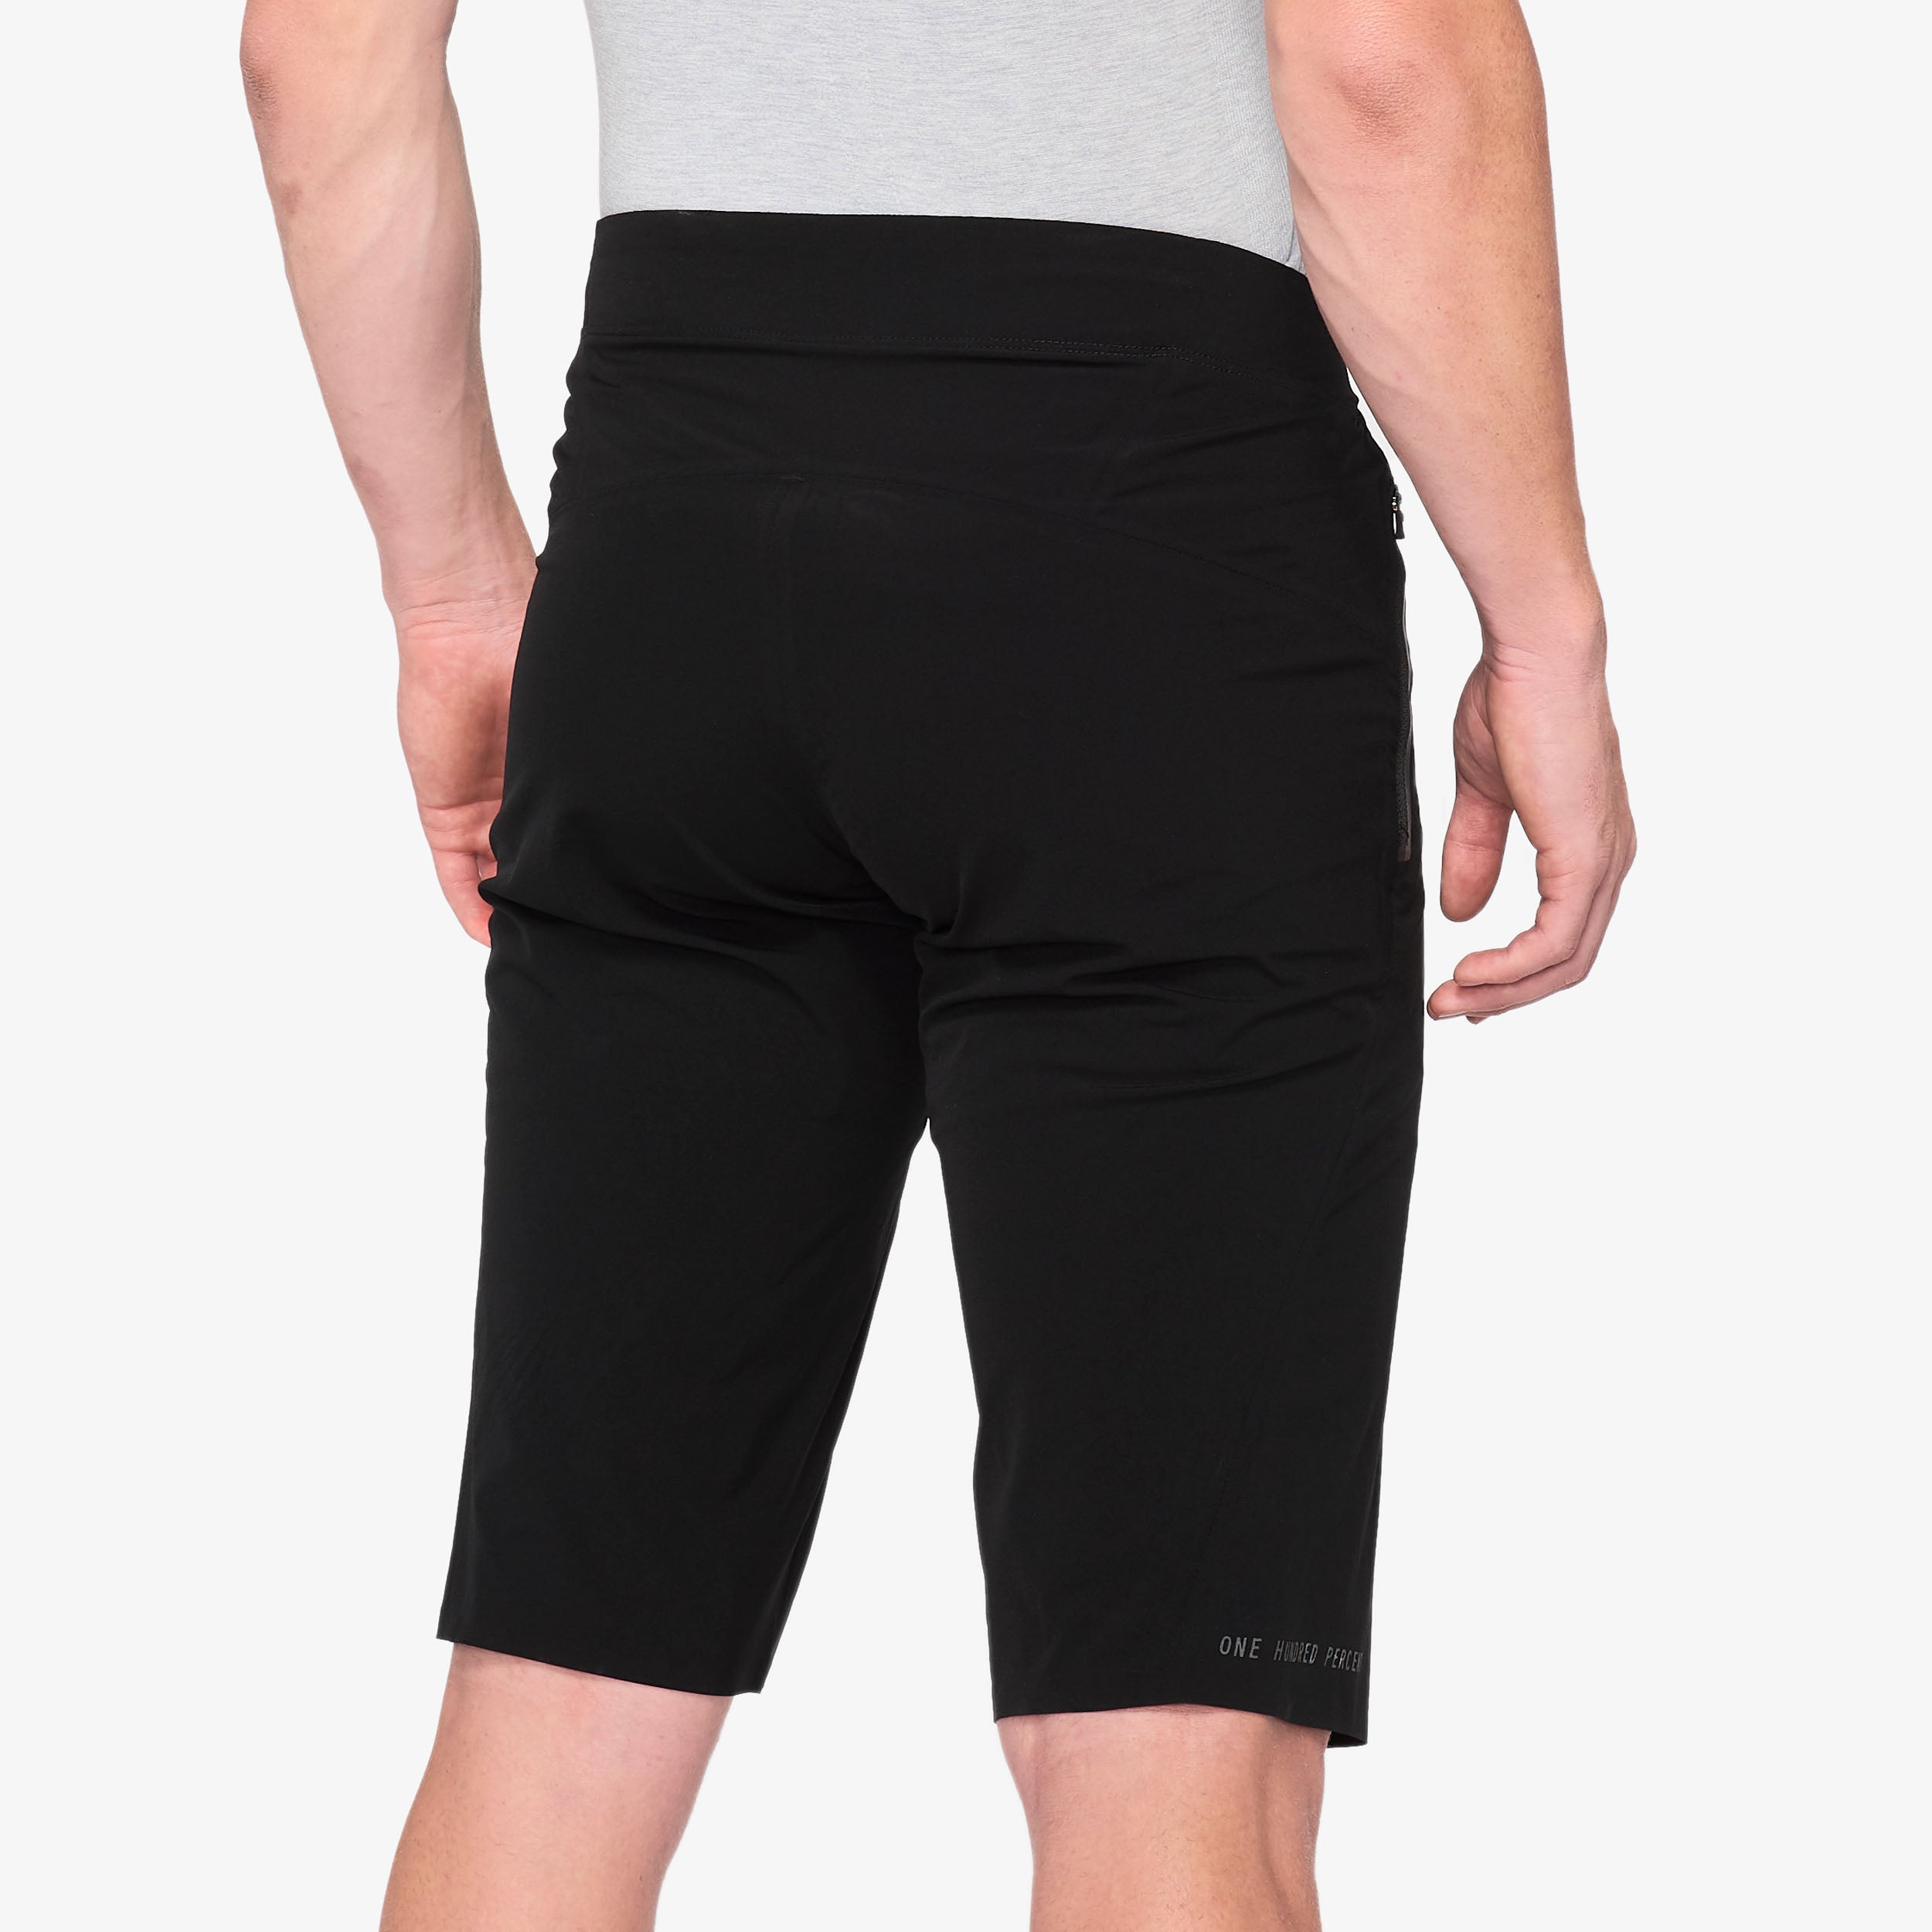 CELIUM Shorts - Black - Secondary